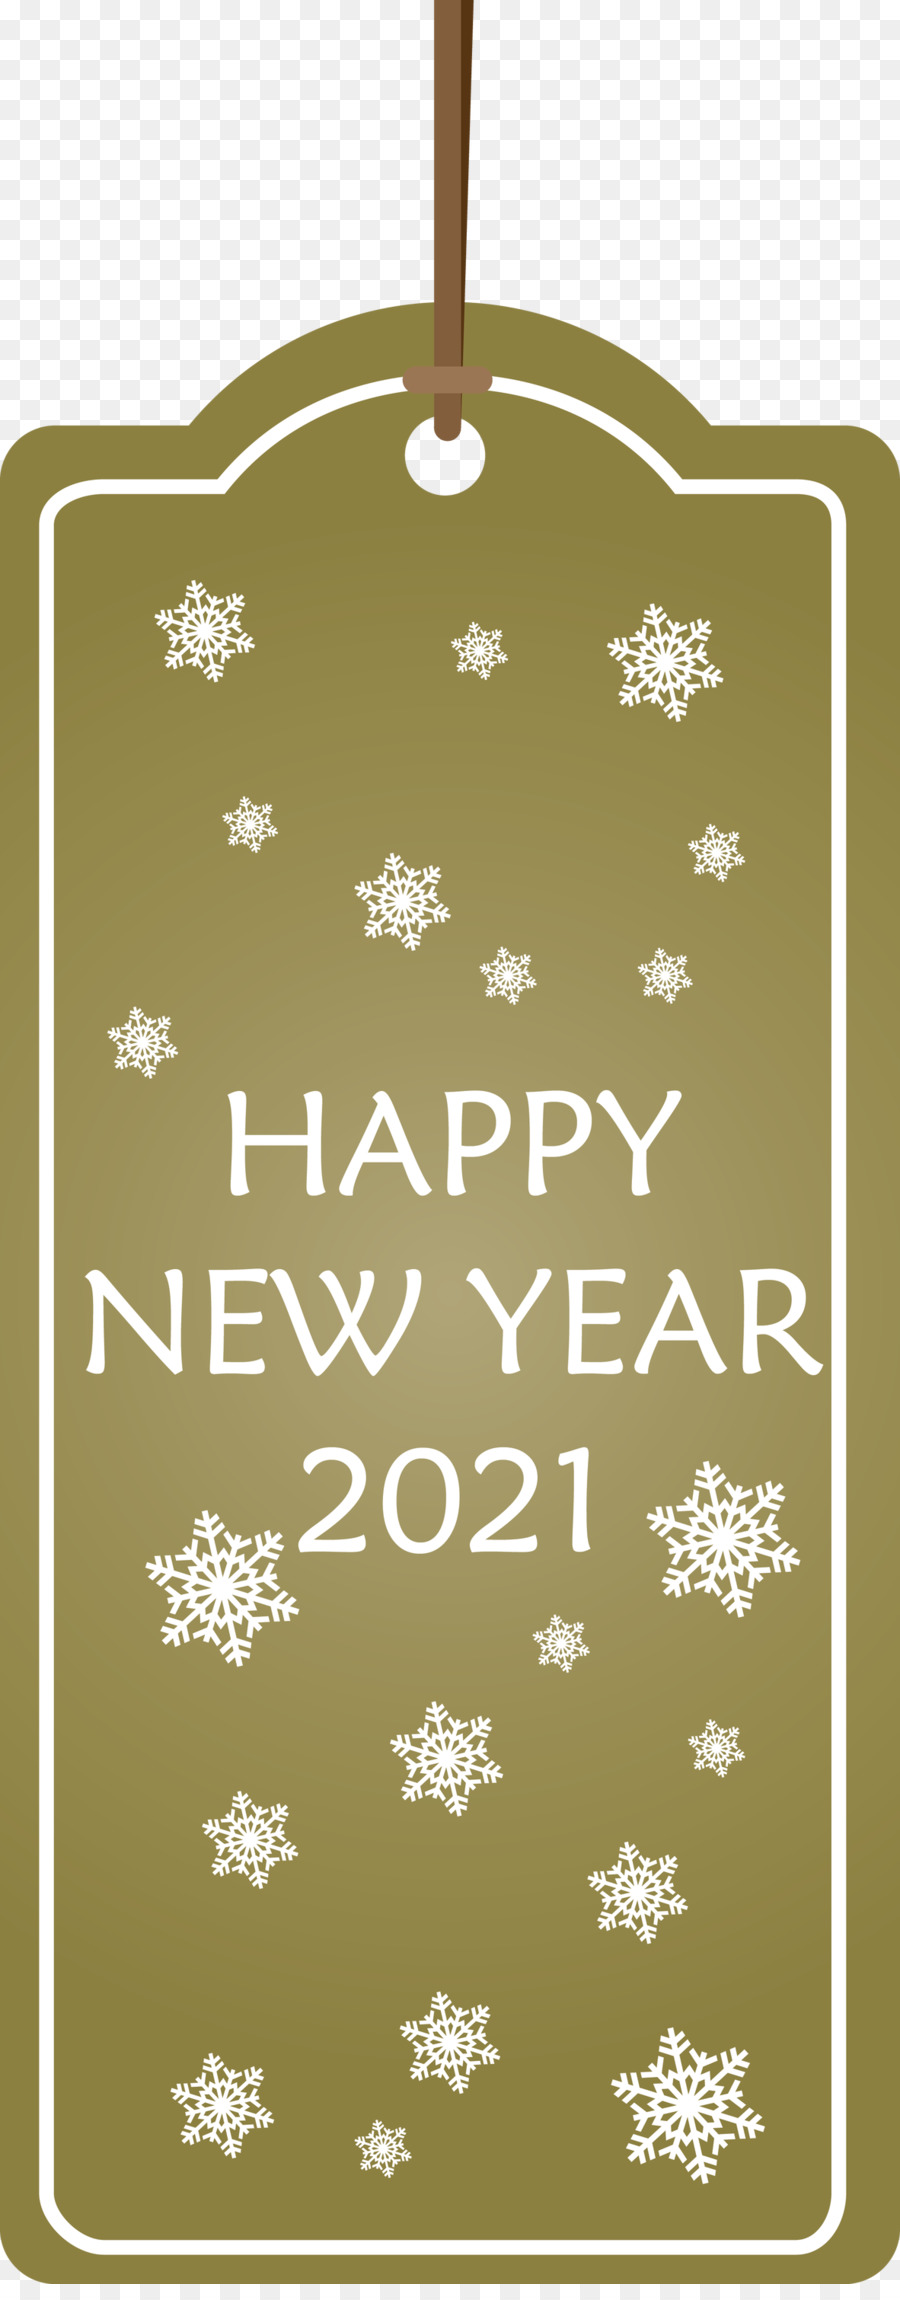 2021 Happy New Year New Year